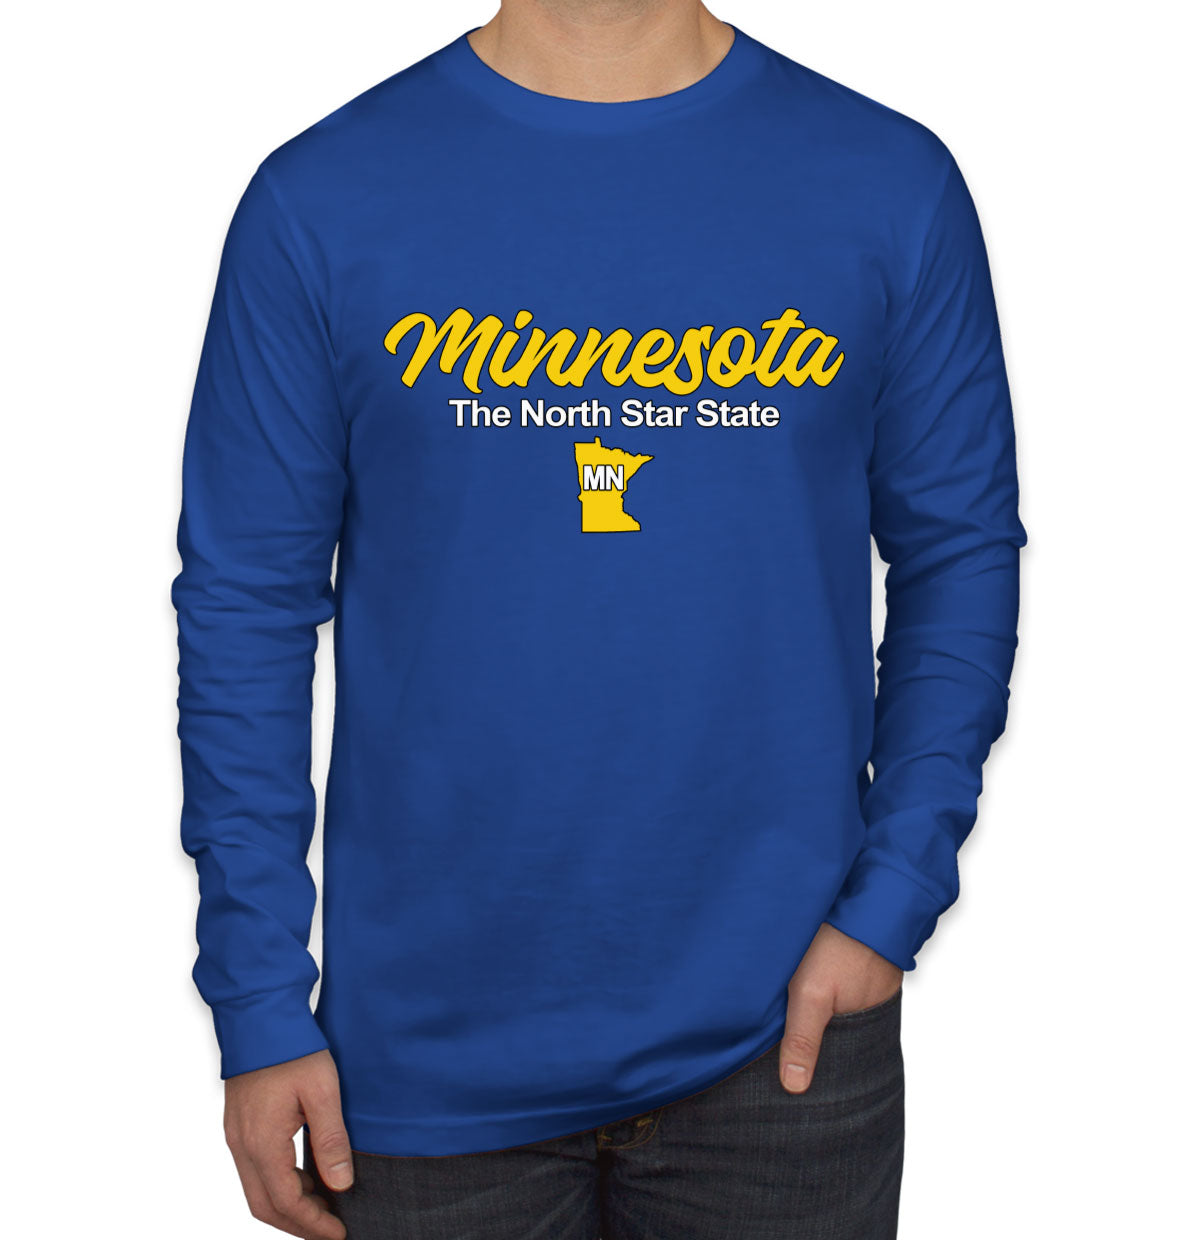 Minnesota The North Star State Men's Long Sleeve Shirt